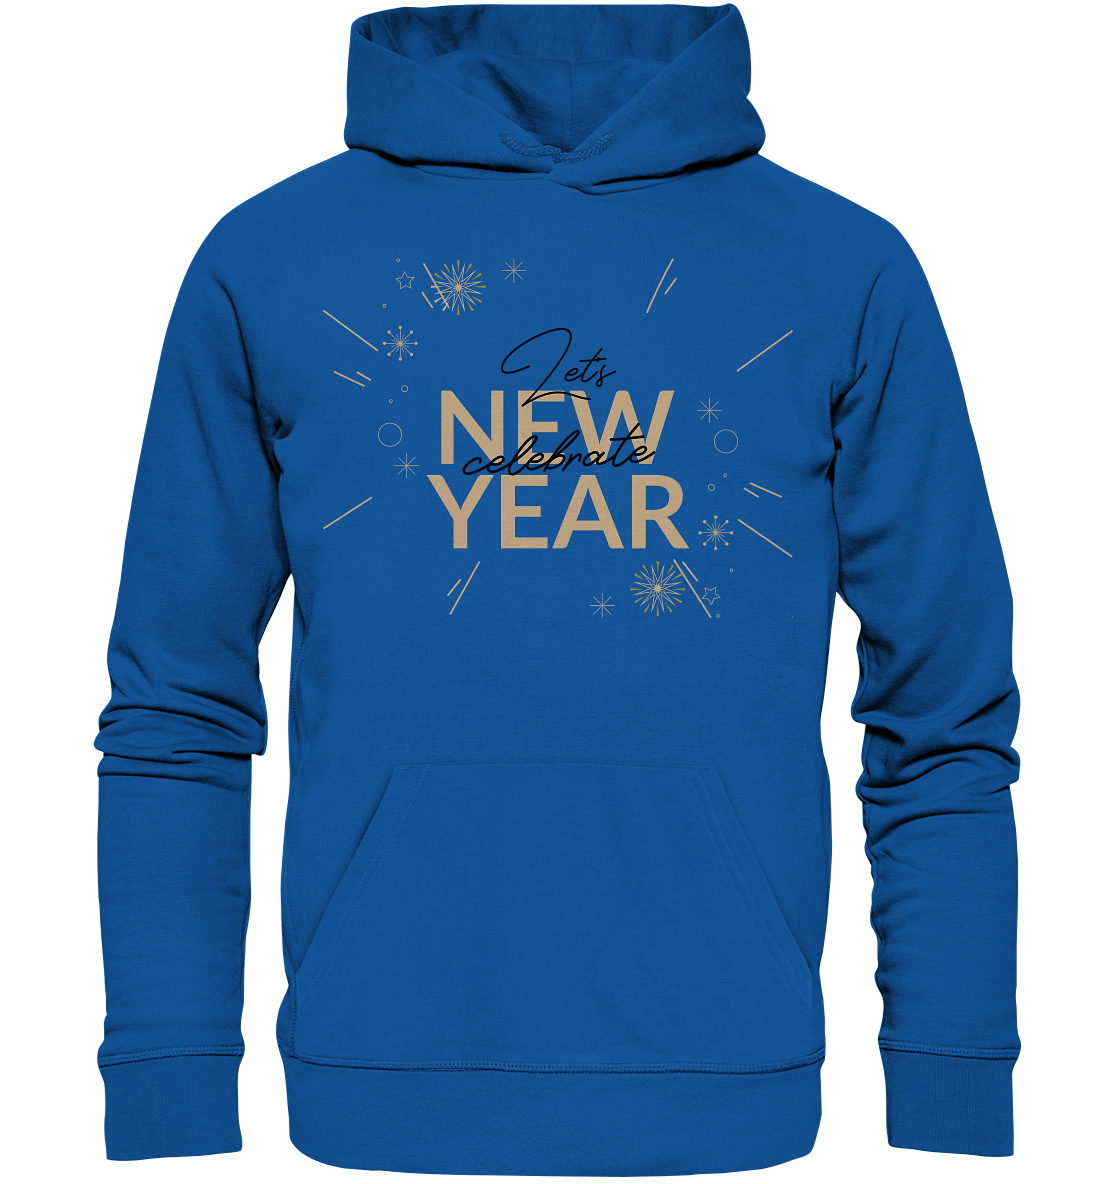 Silvester Kapuzenpullover in blau mit Lettering  Happy New Year Let's celebrate